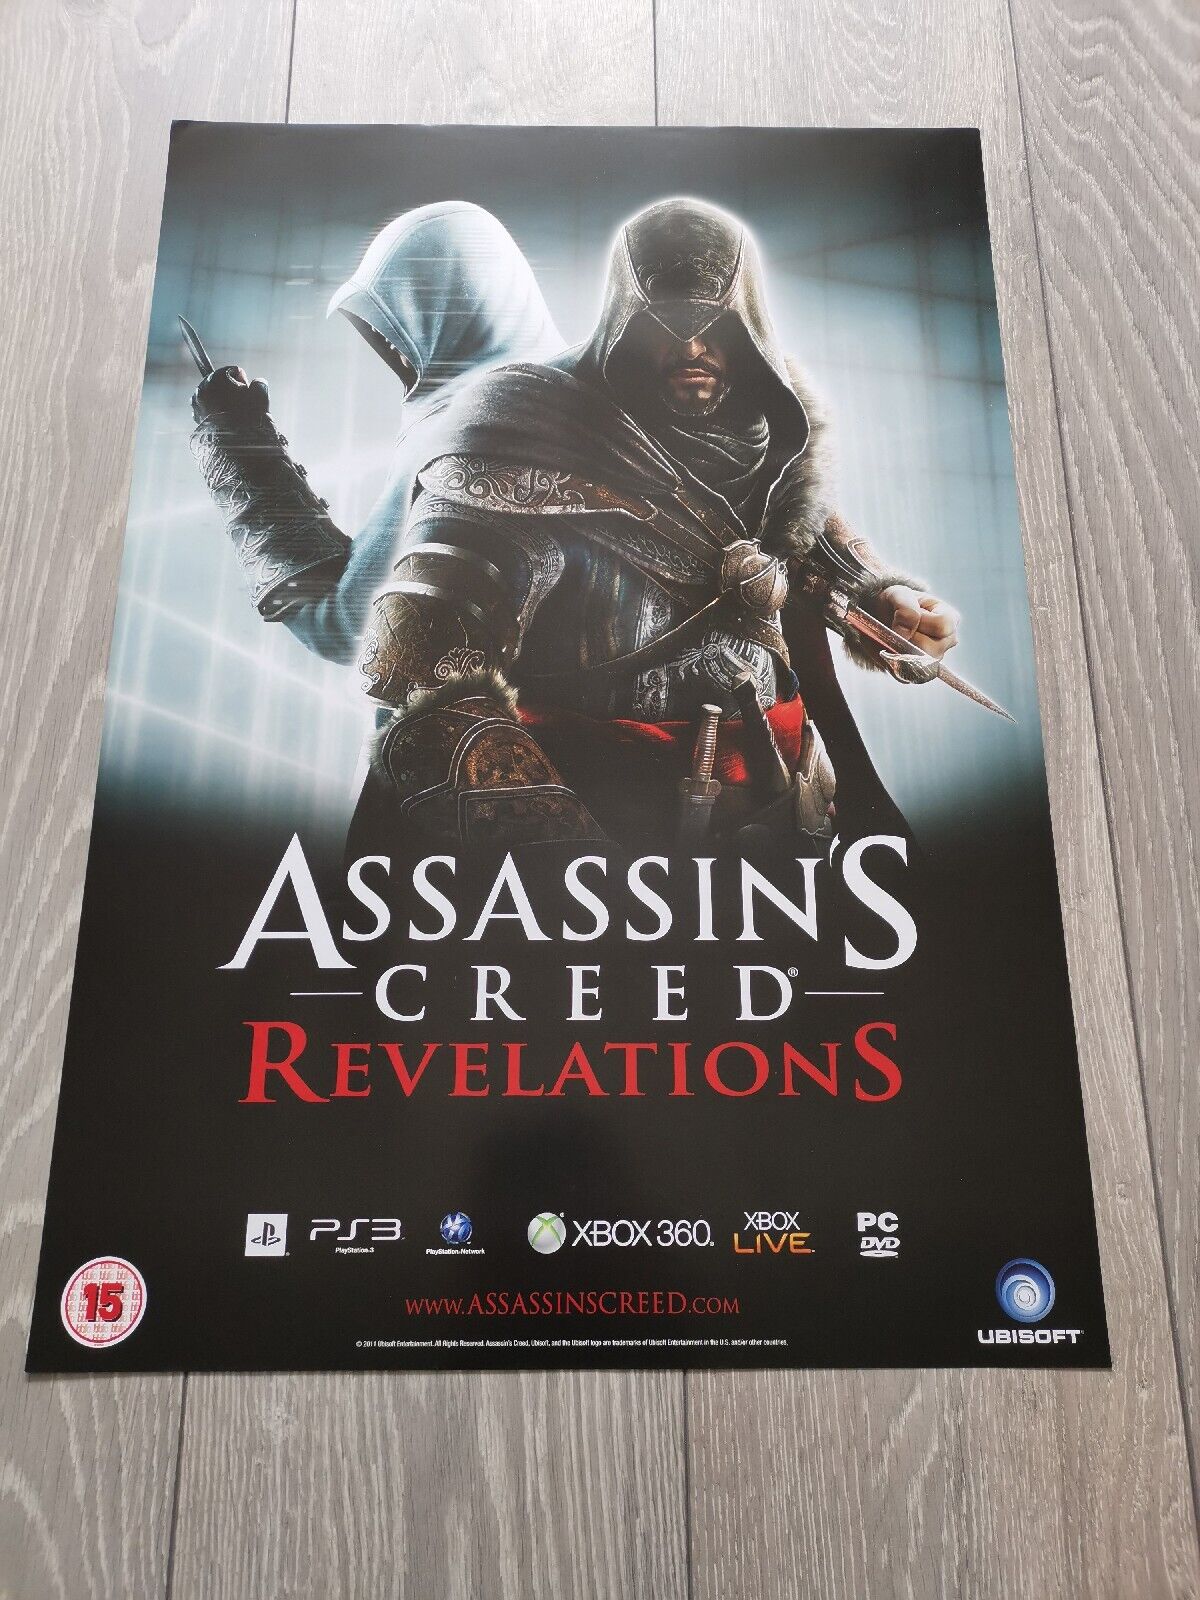 RARO 2011 Assassins Creed Revelations Ezio Auditore PS3 póster promocional previo al lanzamiento